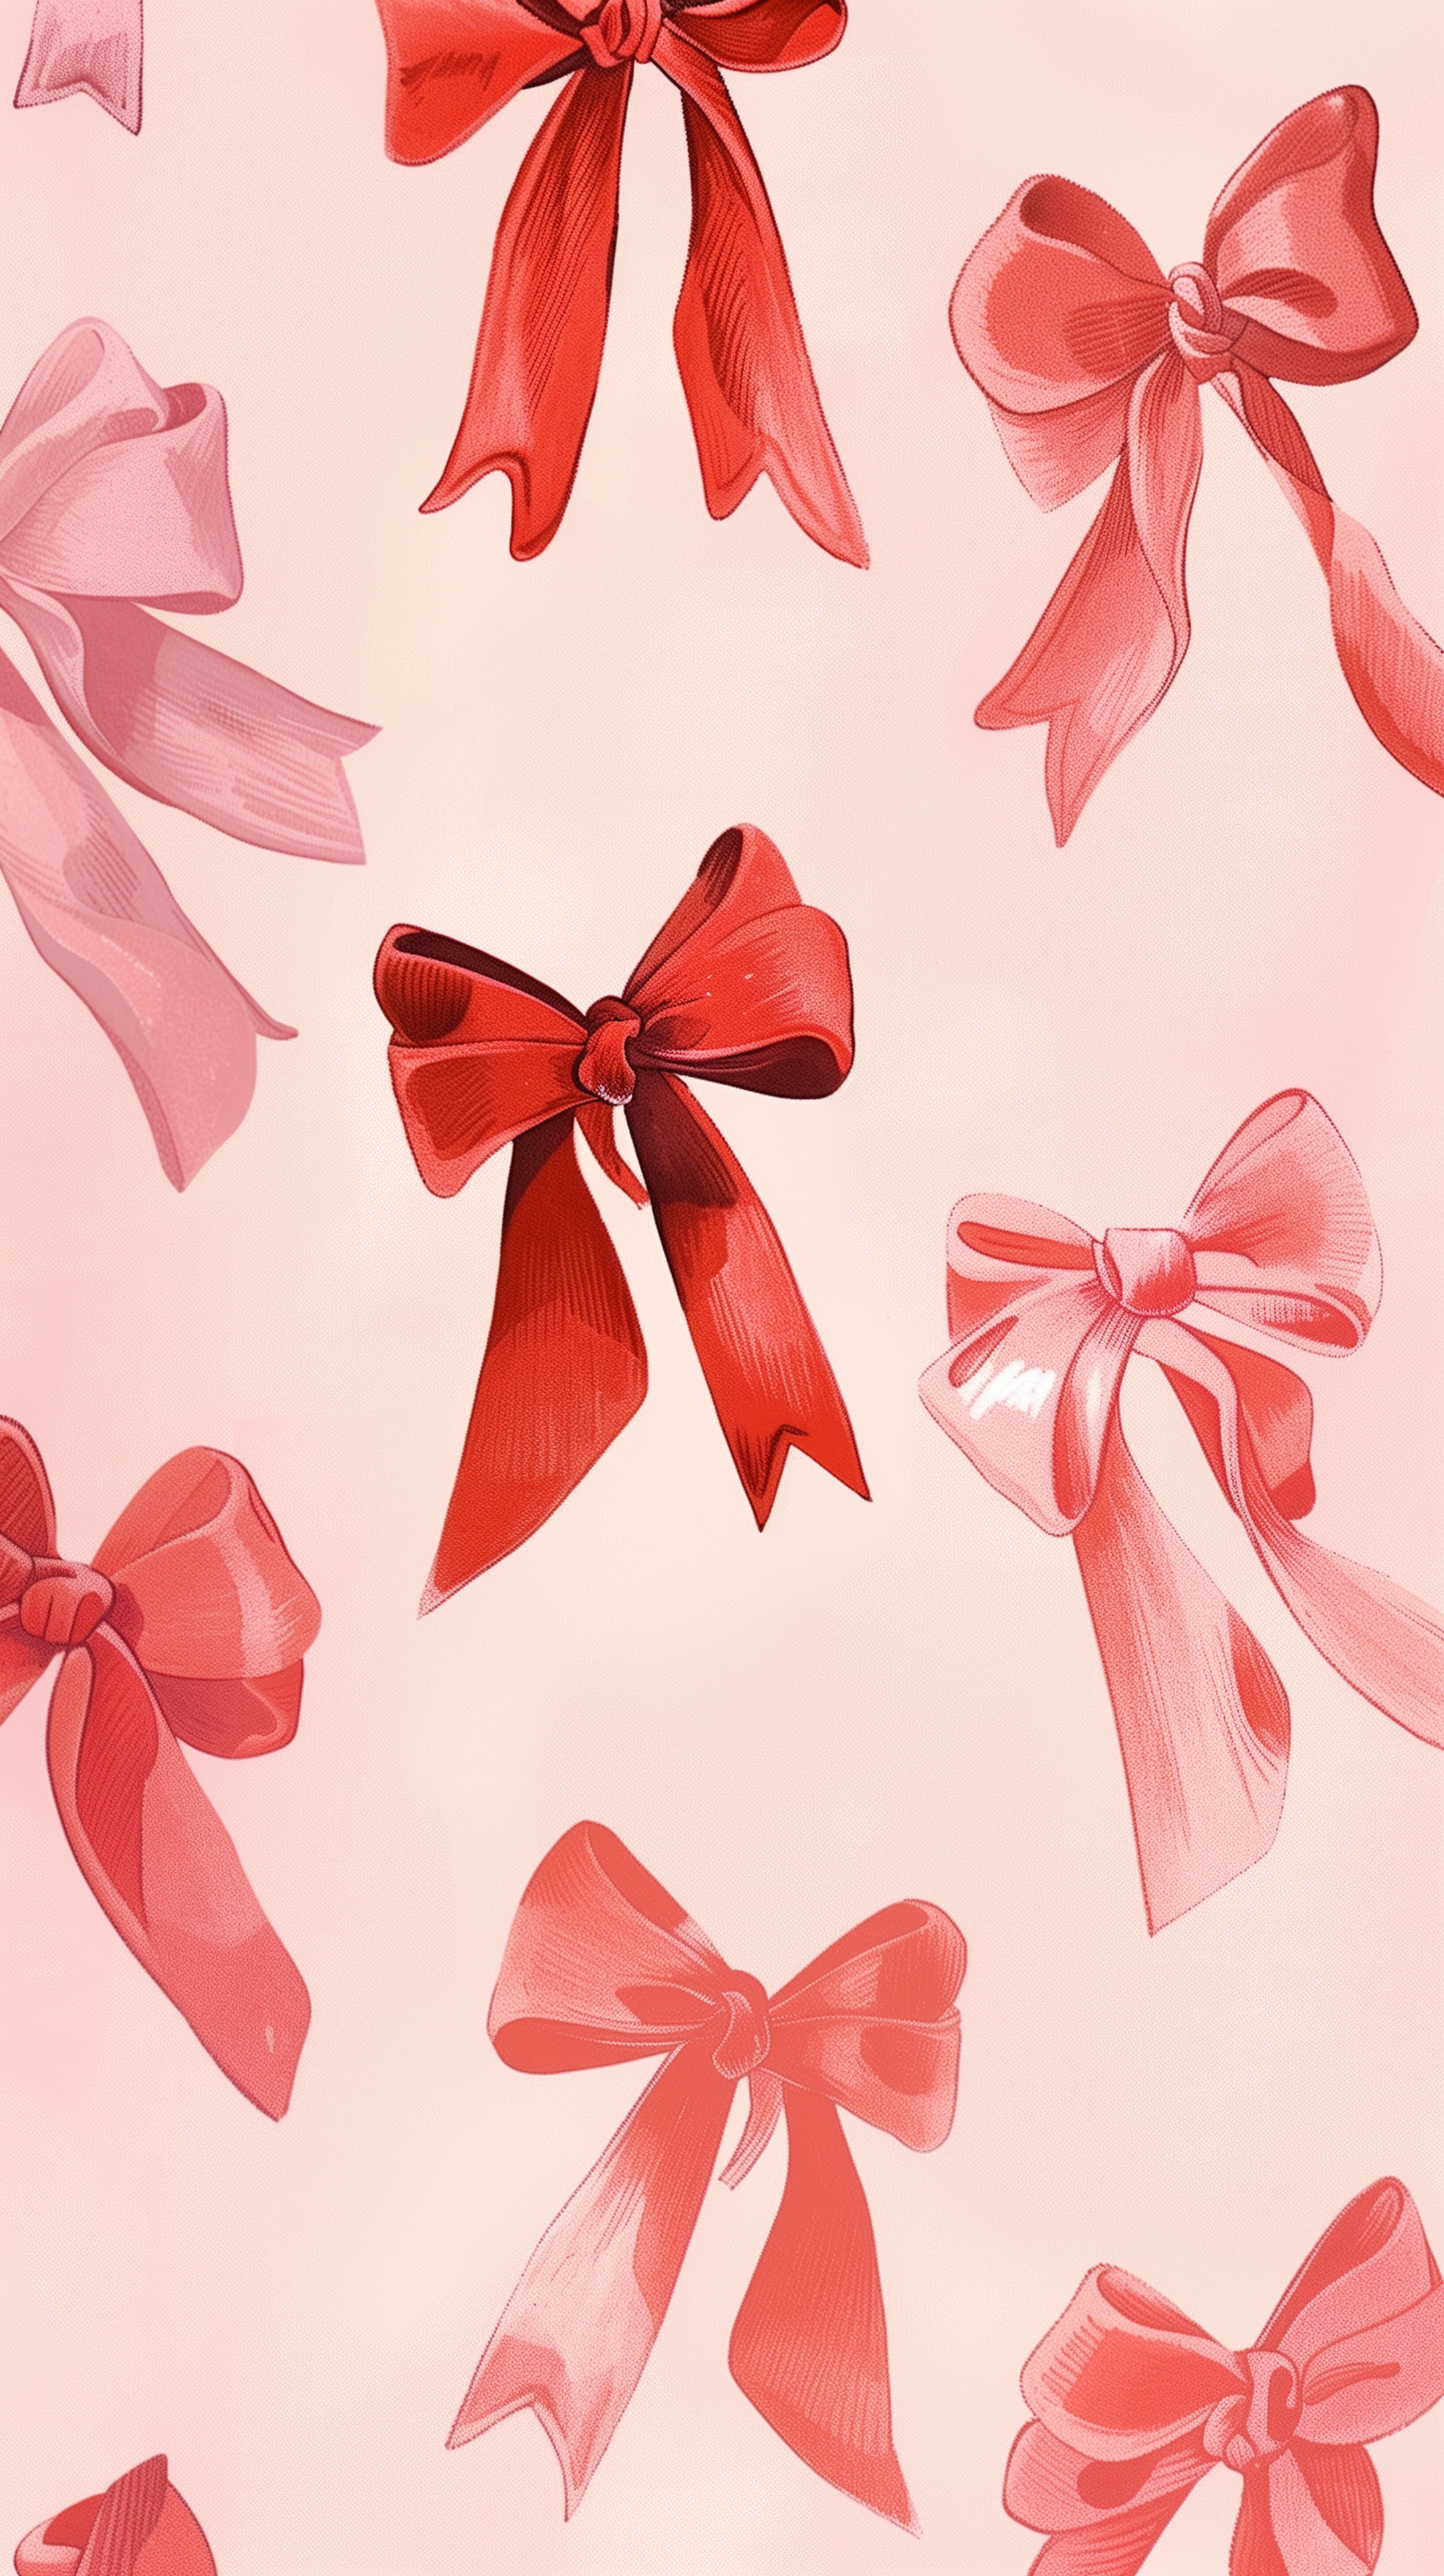 Pretty Pink Ribbons for Your Screen Fond d'écran[f8723b9734e840c3ae5d]